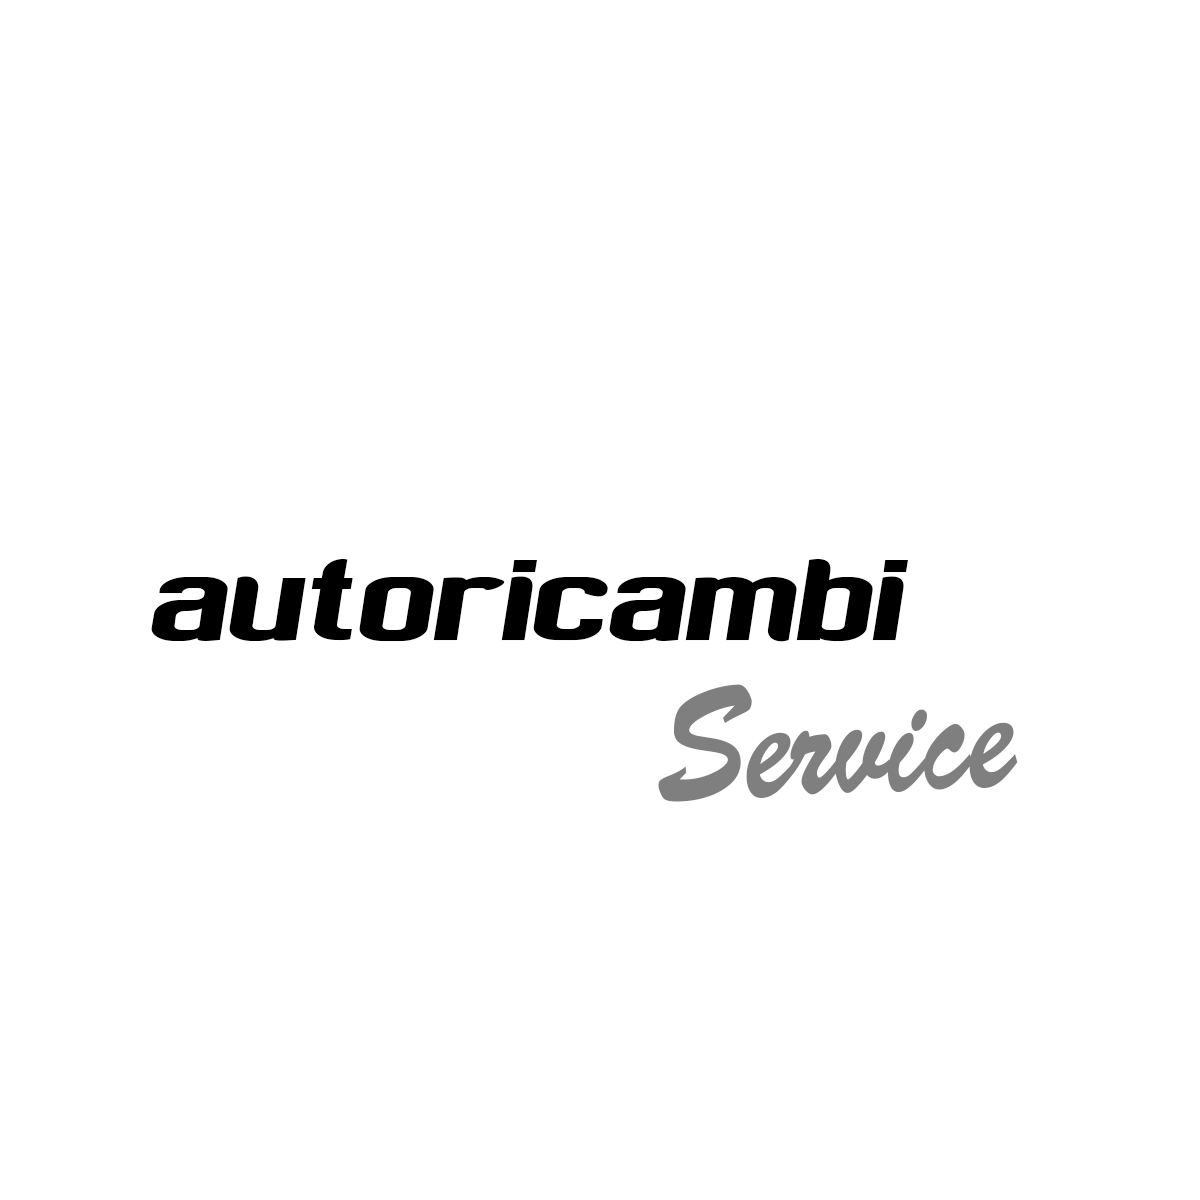 Buy second-hand car parts – Autoricambi Service